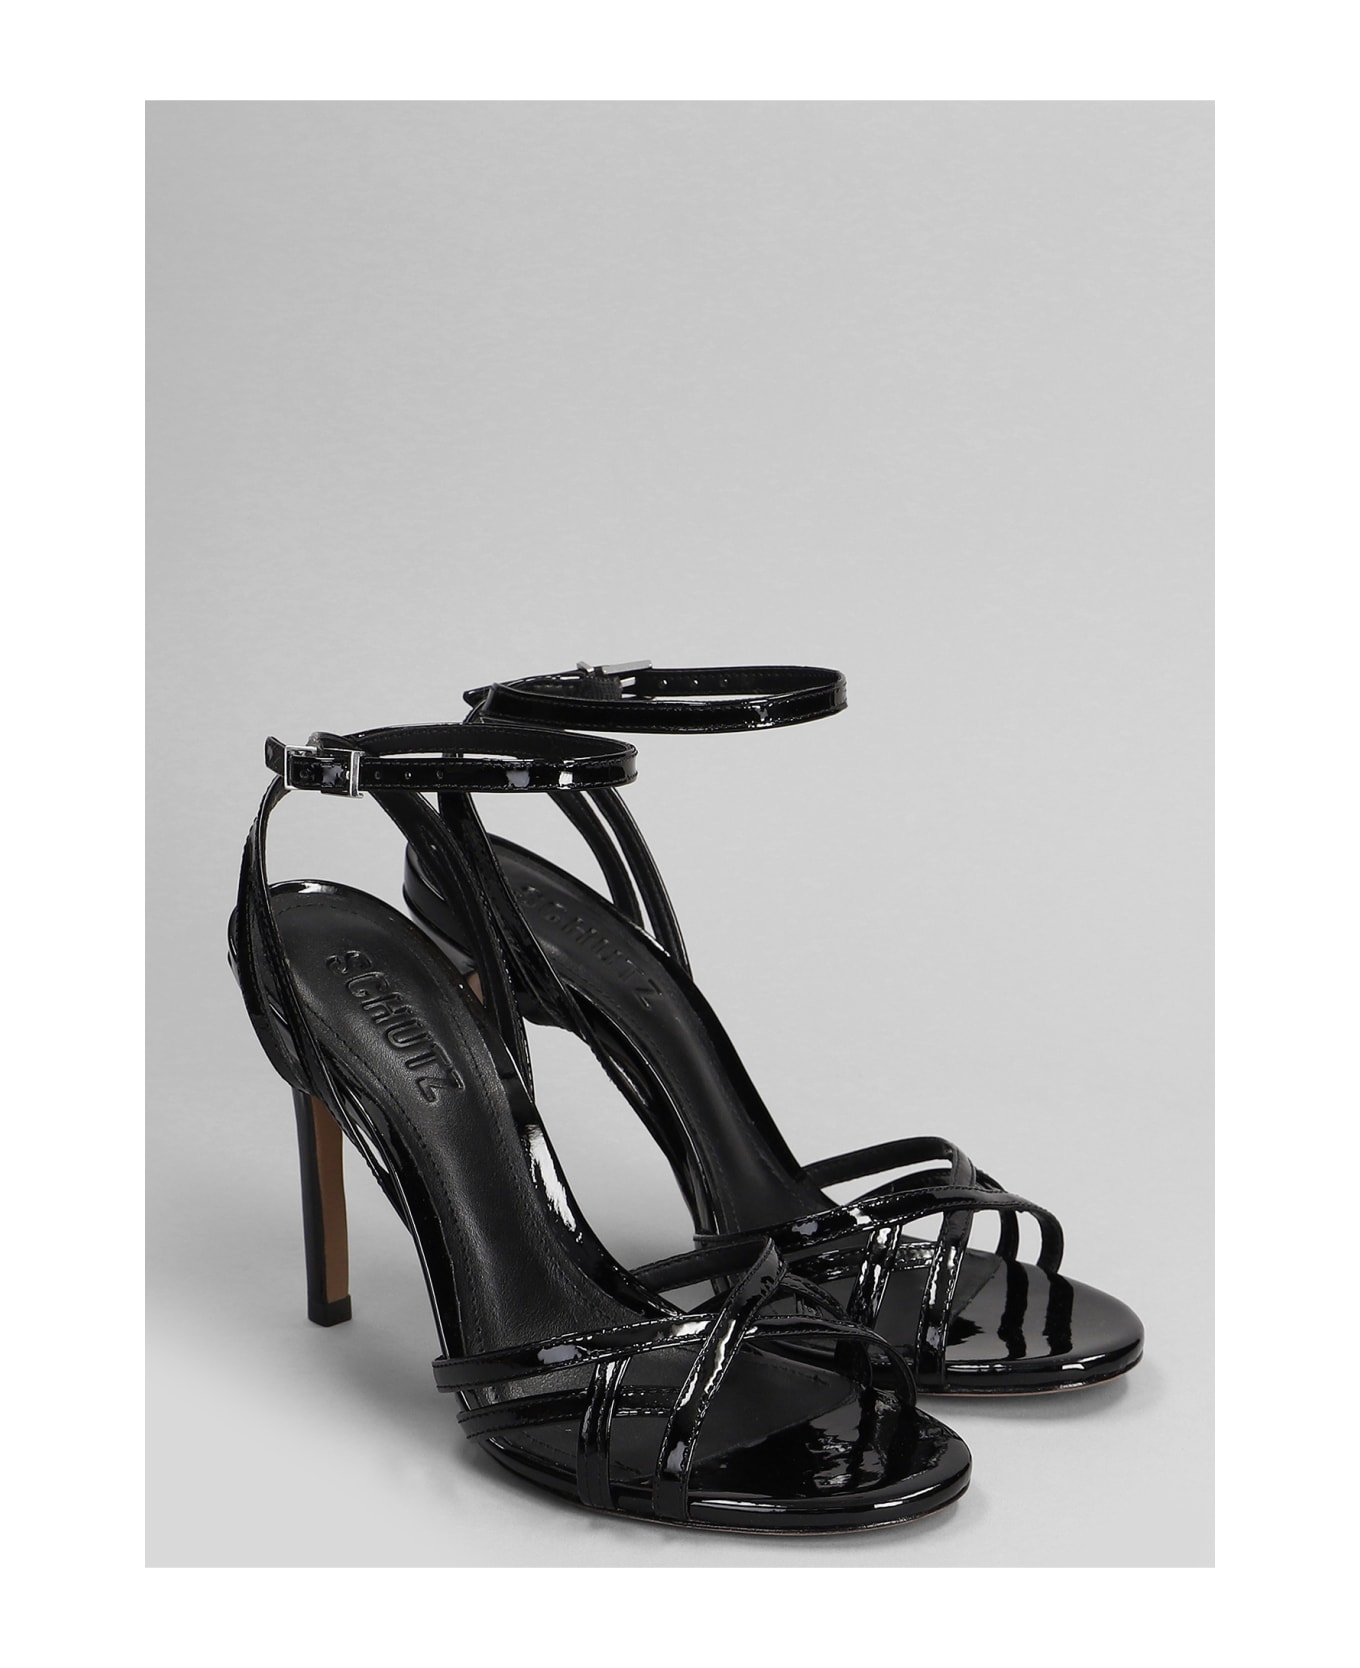 Schutz Sandals In Black Patent Leather - black サンダル